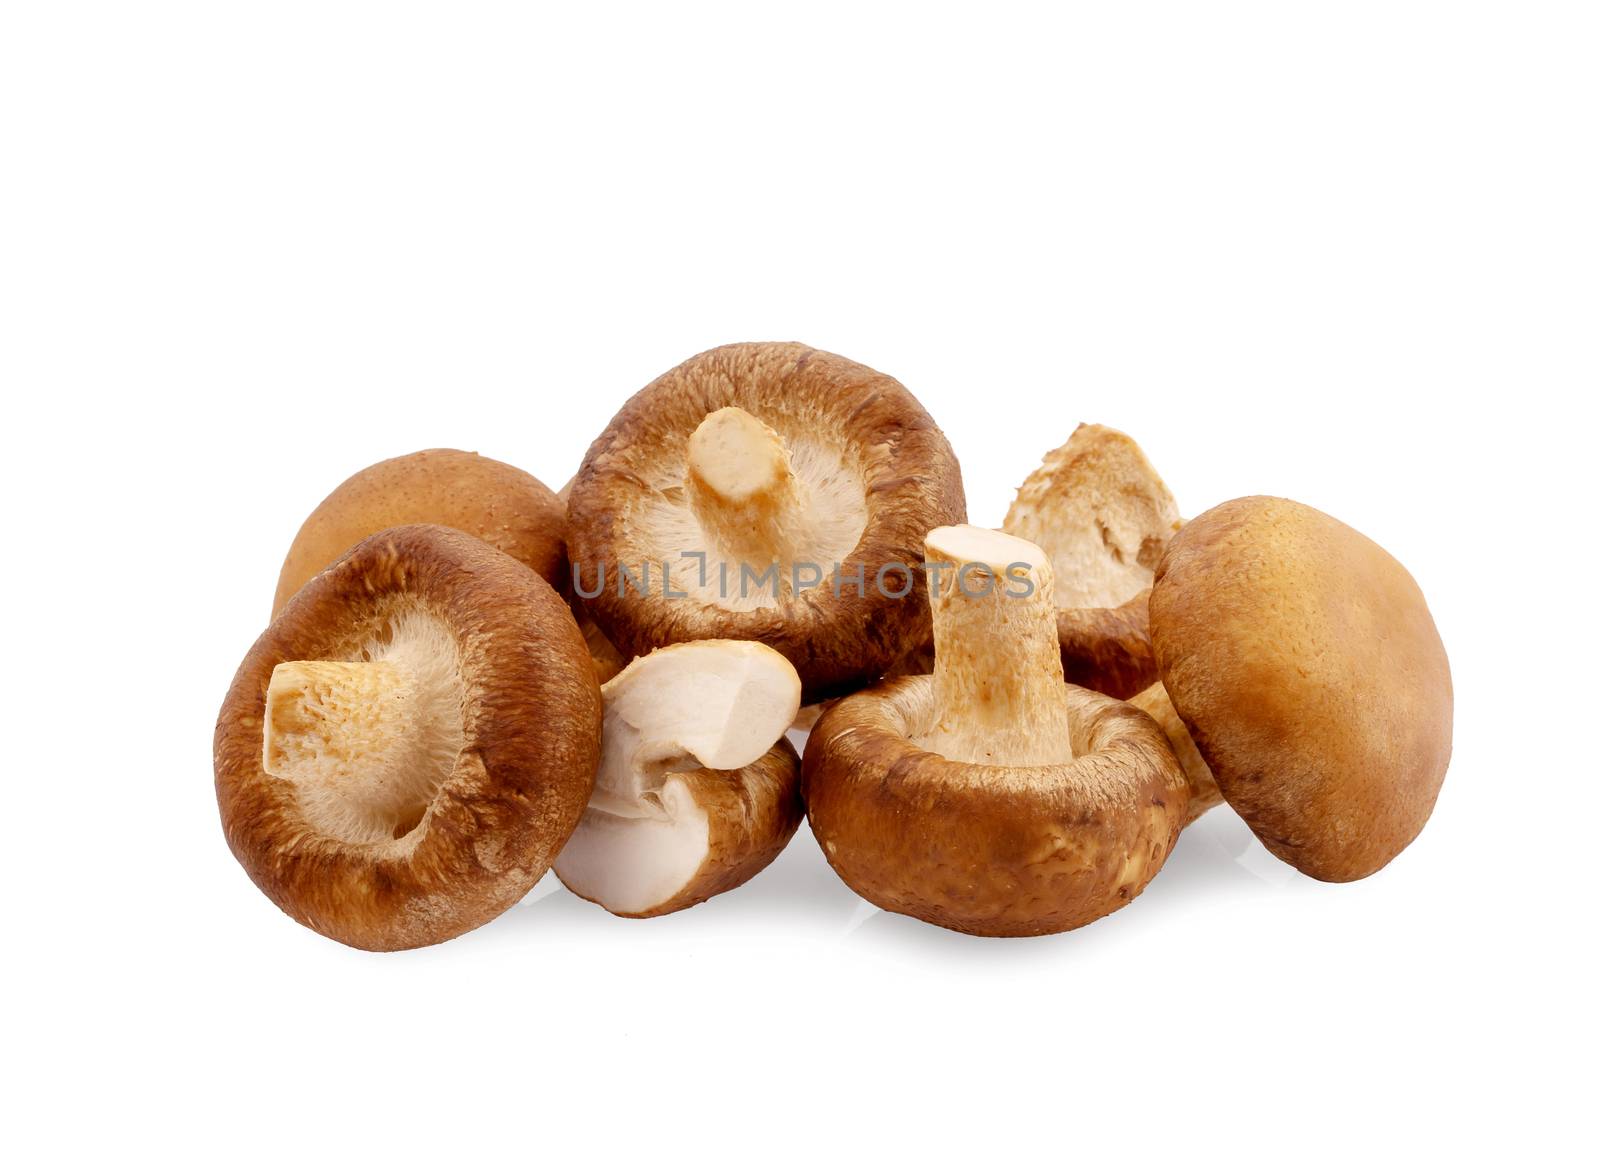 
Shiitake mushroom on the White background by freedomnaruk